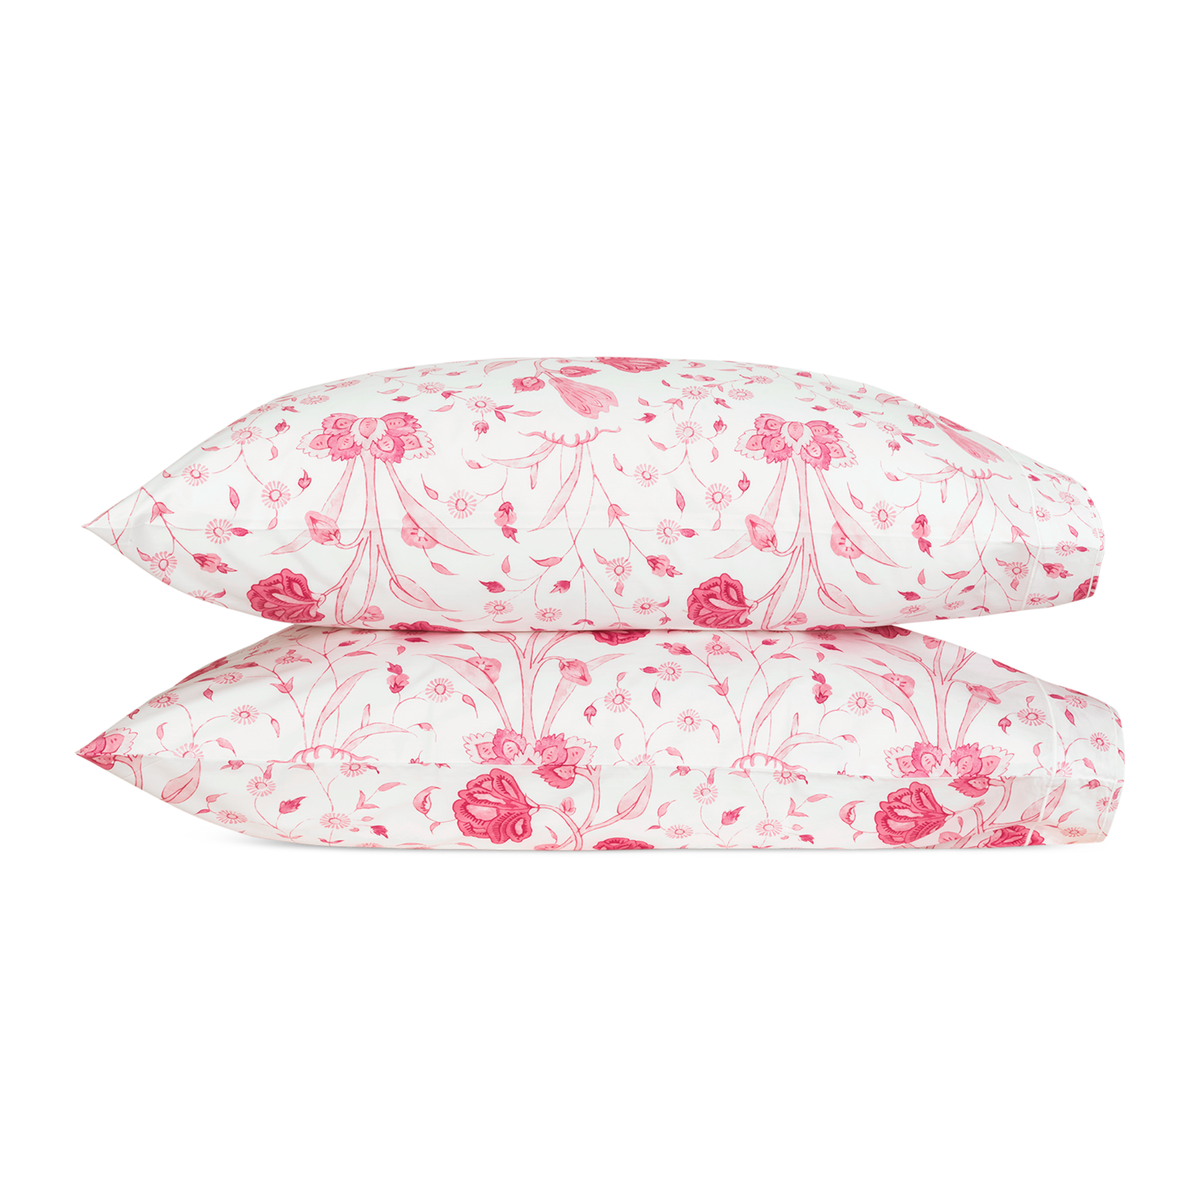 A Pair of Pillowcases of Matouk Schumacher Khilan Bedding Color Peony